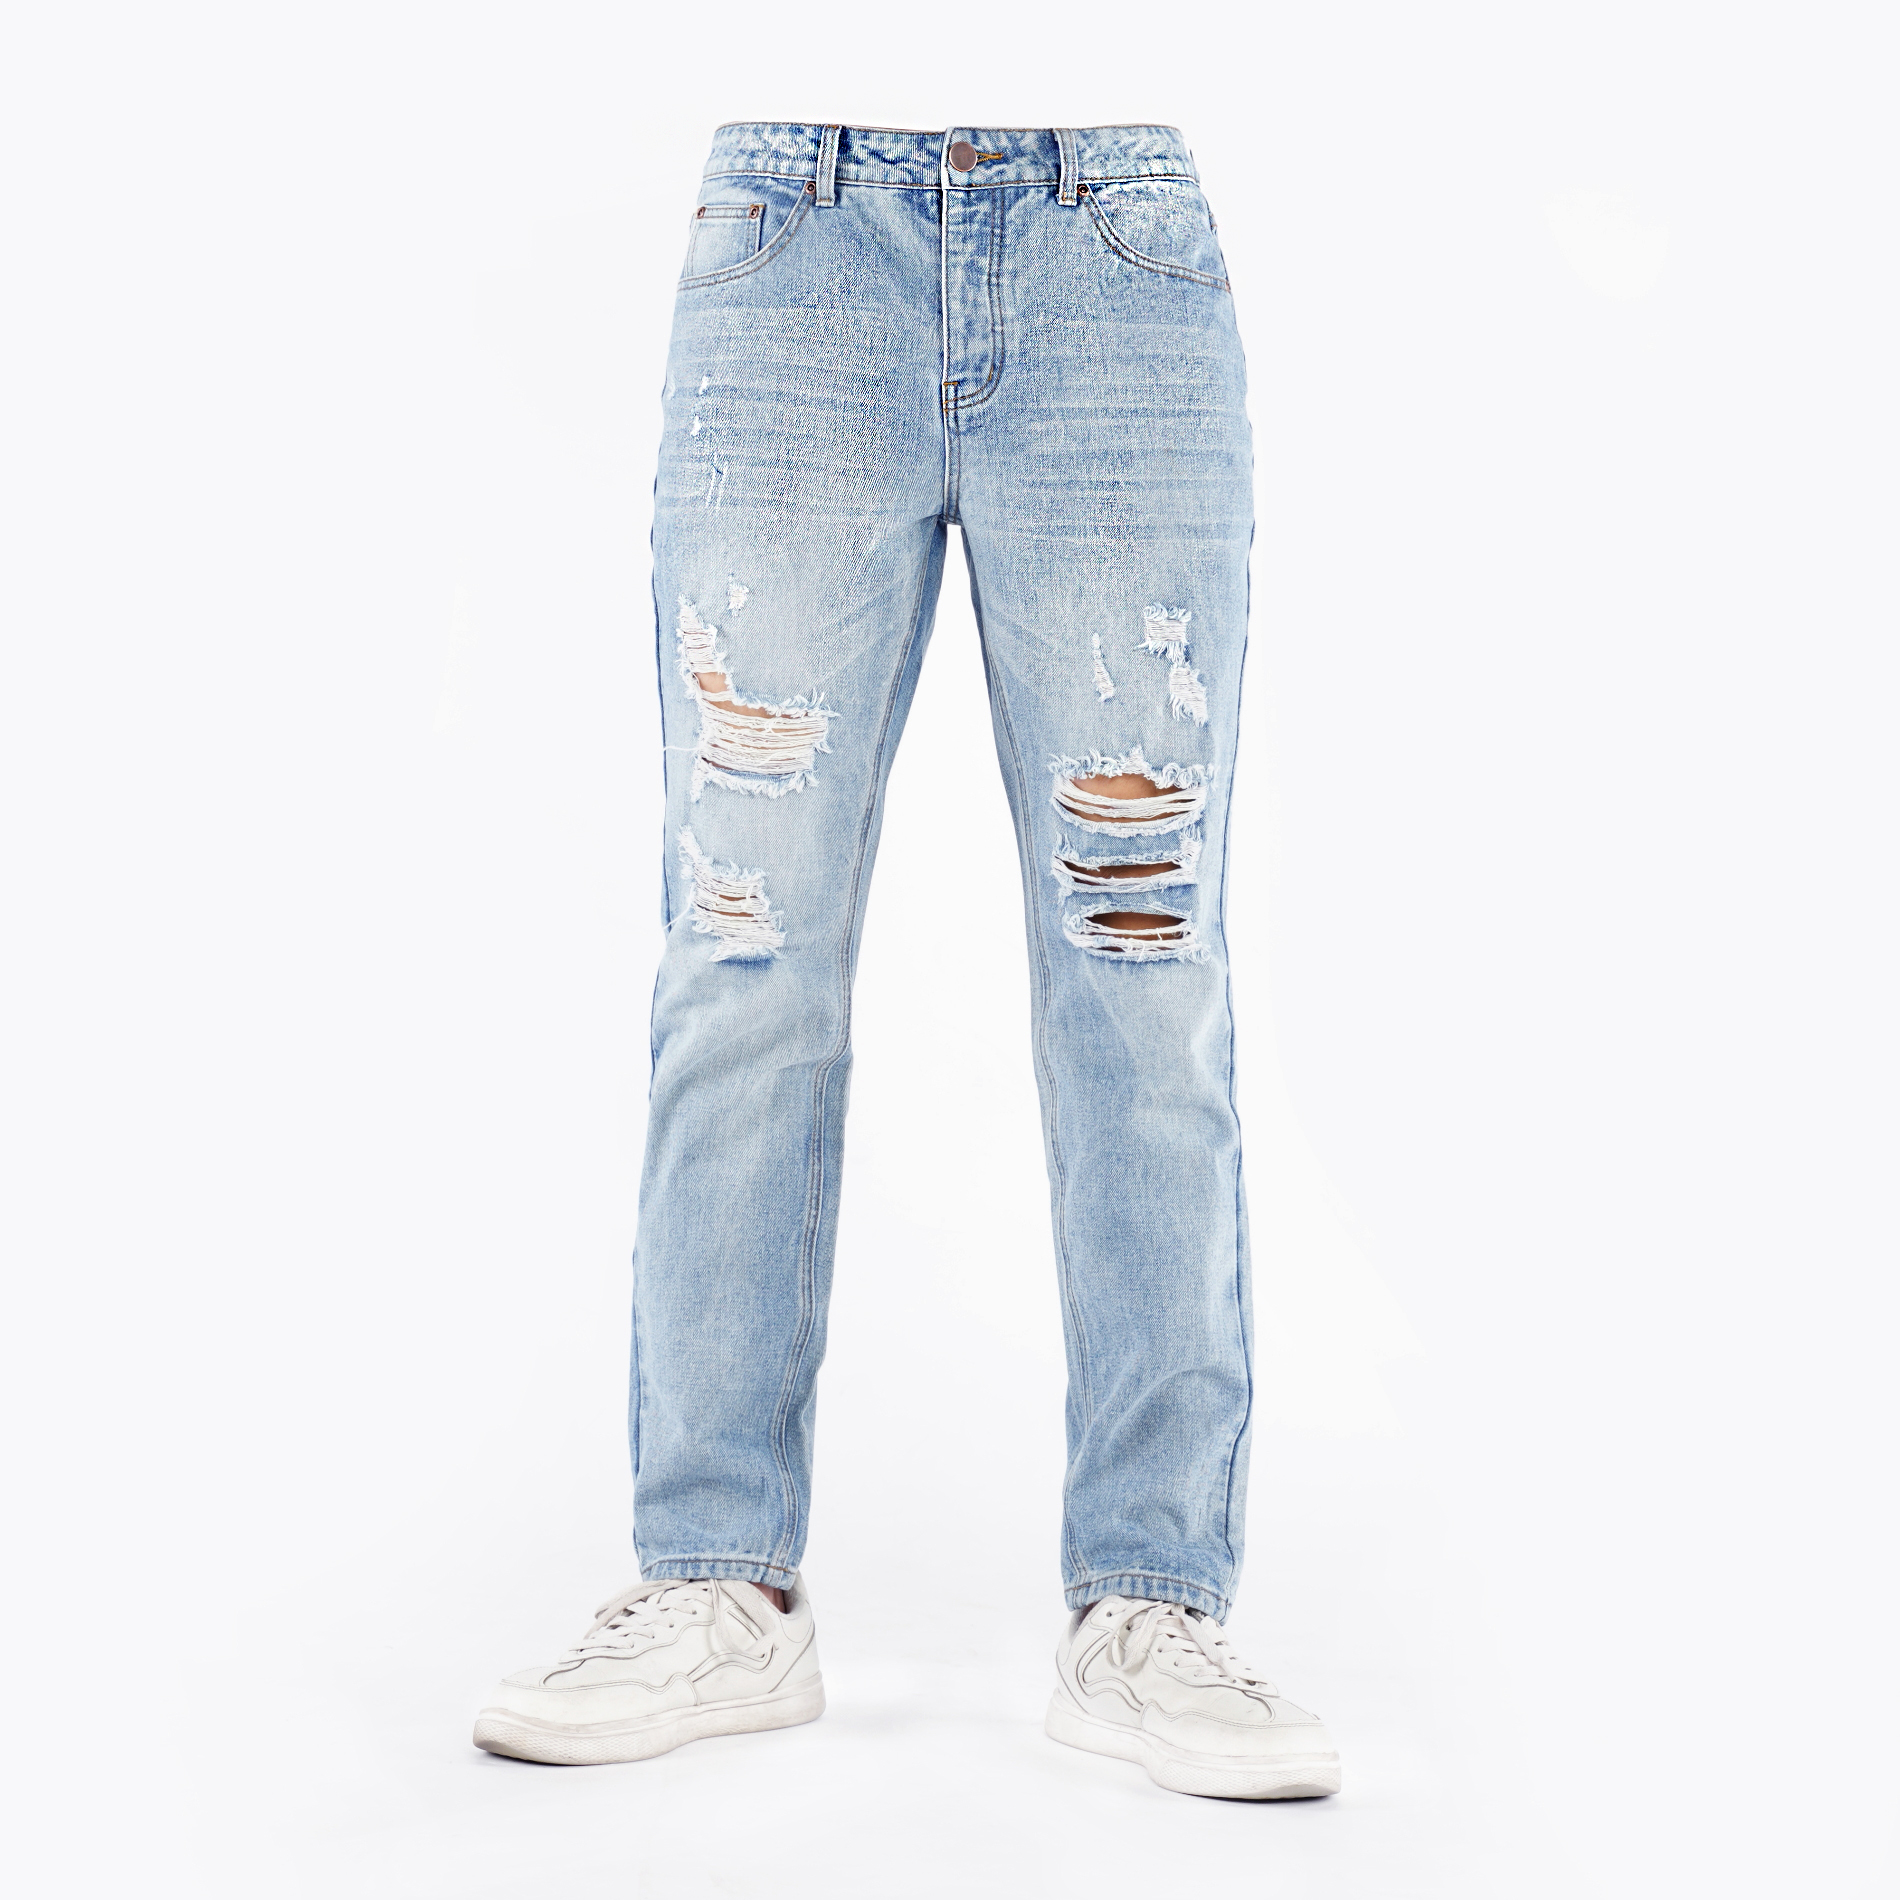 Wholesale New Trendy Mens Summer Fashion Jeans Slim Fit Holes Casual Denim Jeans